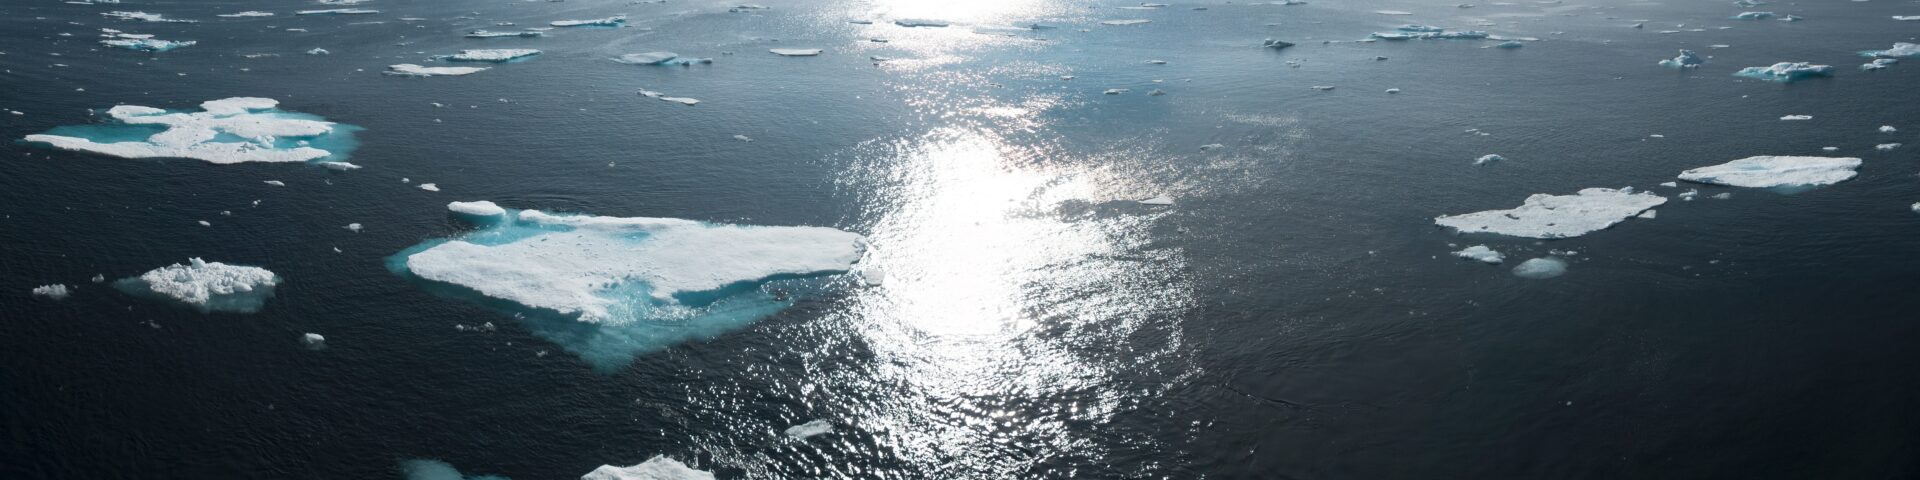 Ice bergs in the ocean